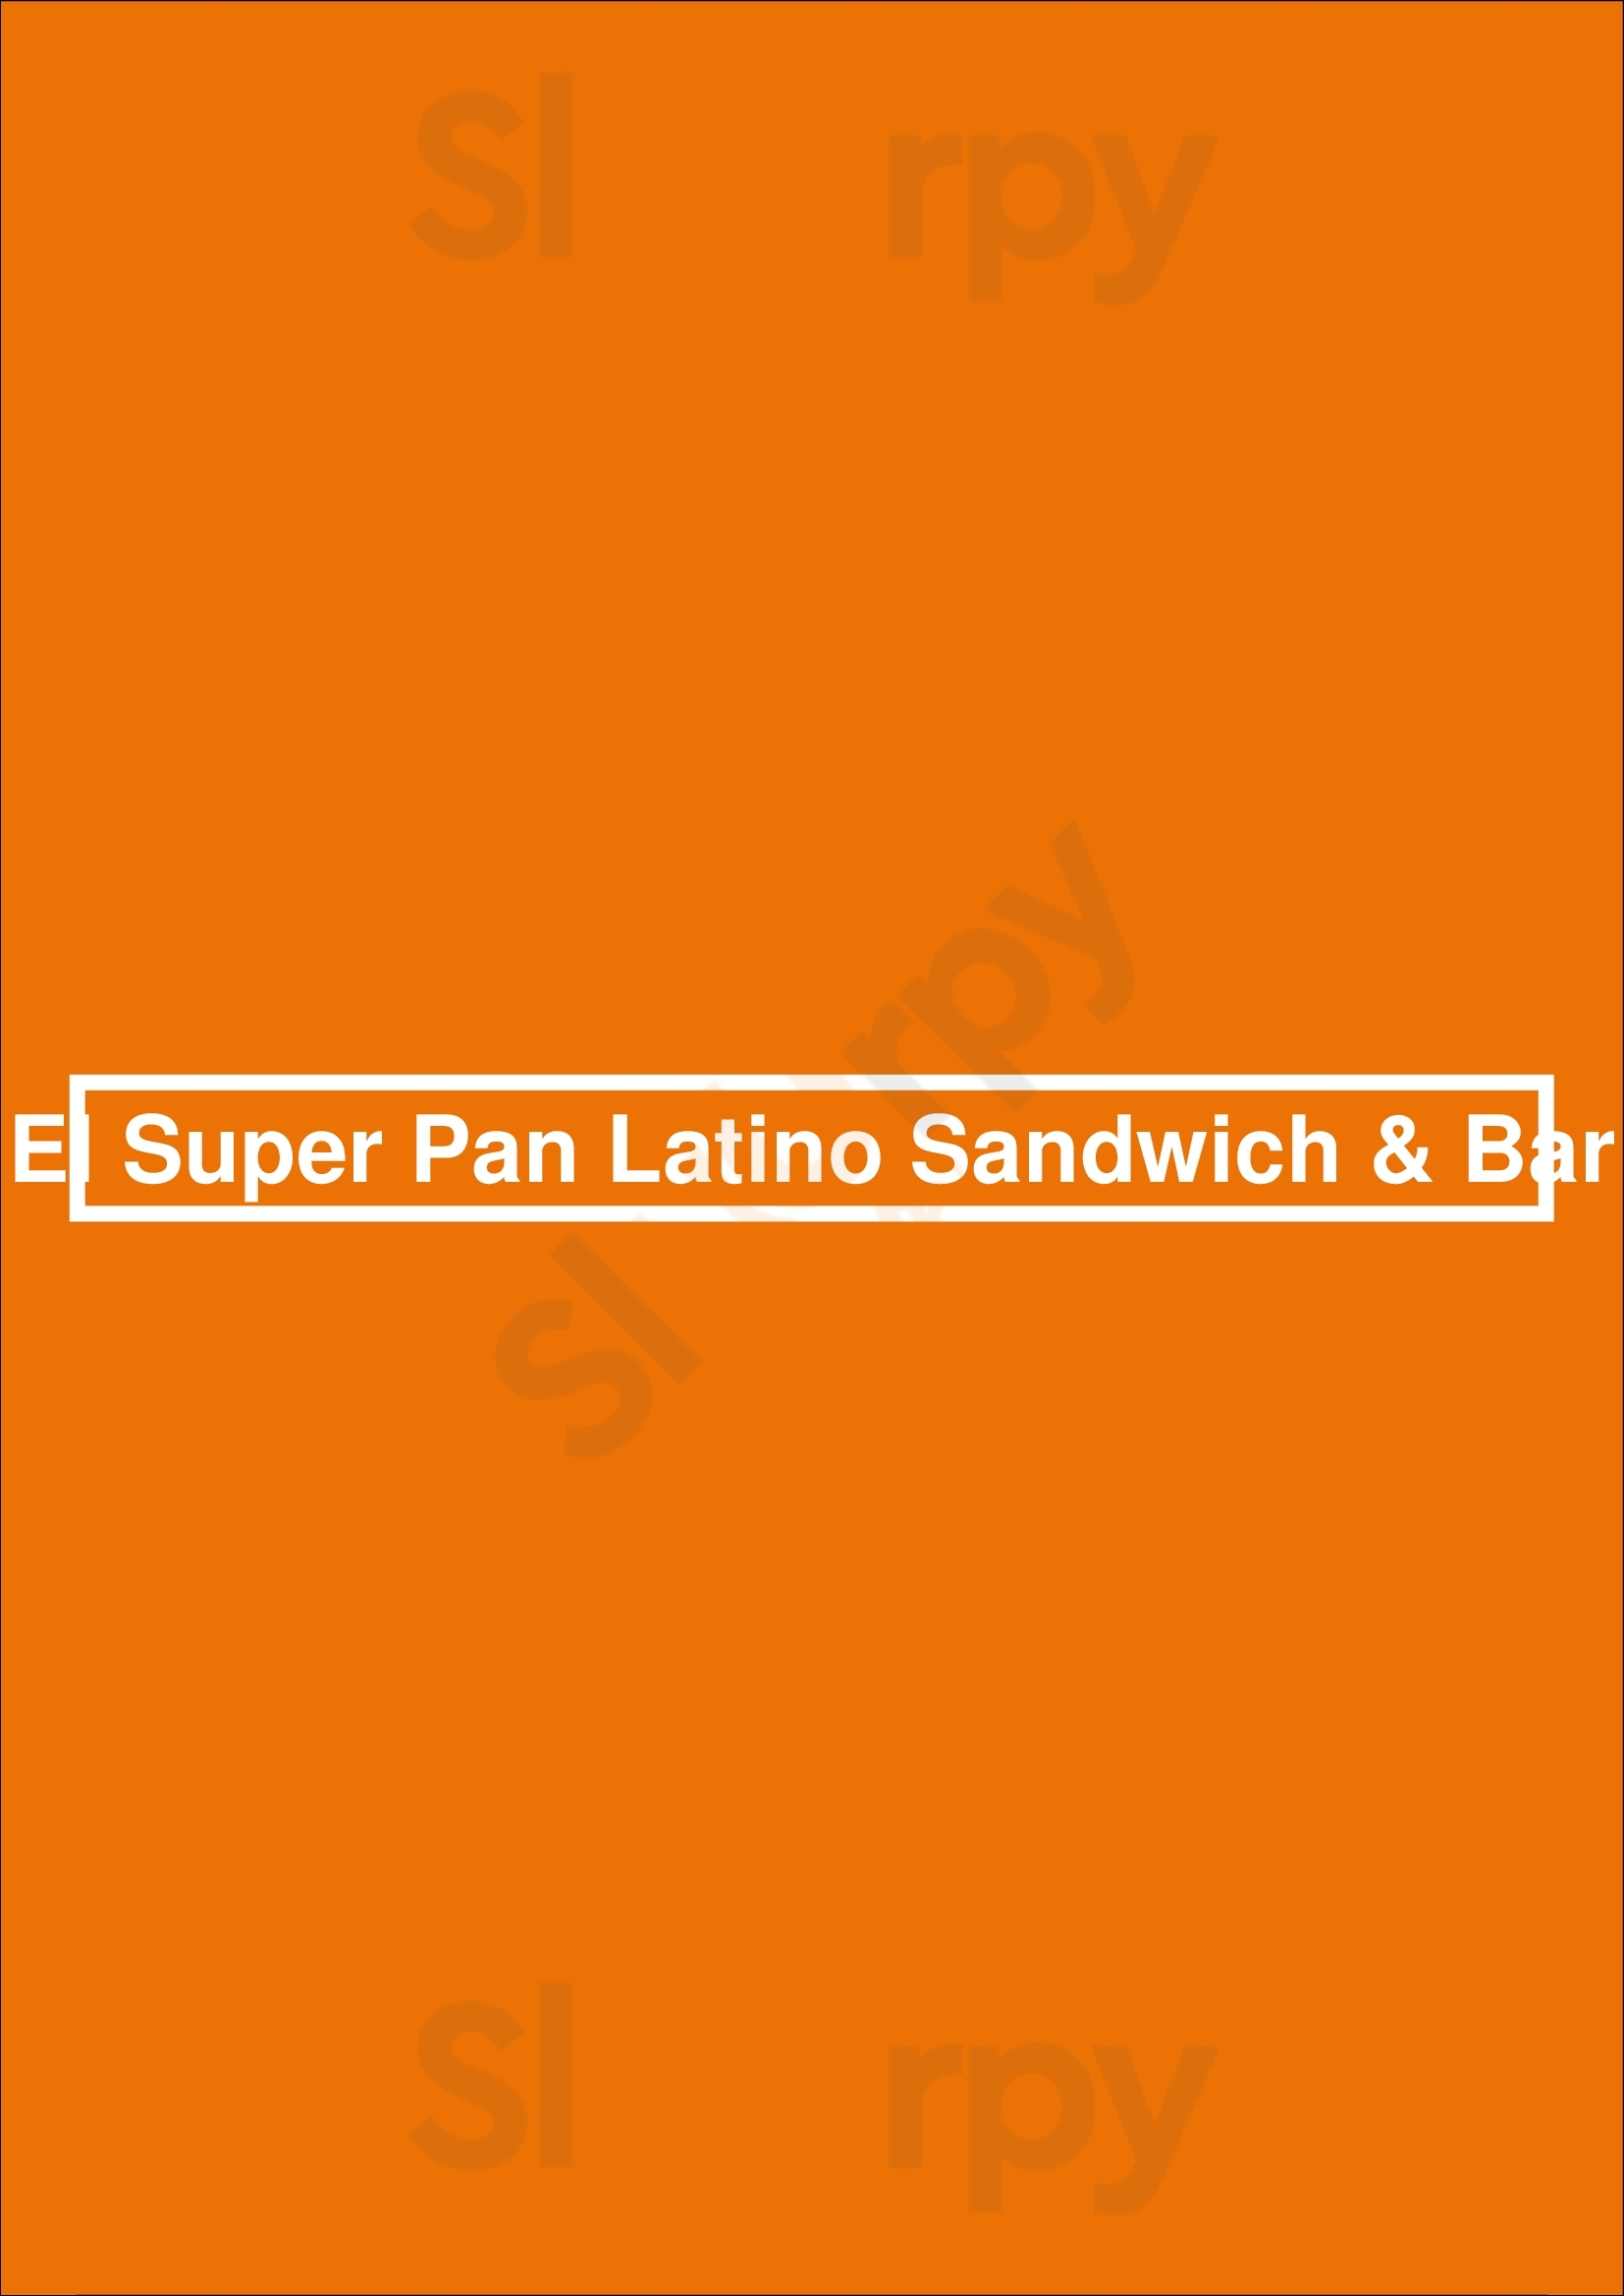 El Super Pan Latino Sandwich & Bar Atlanta Menu - 1